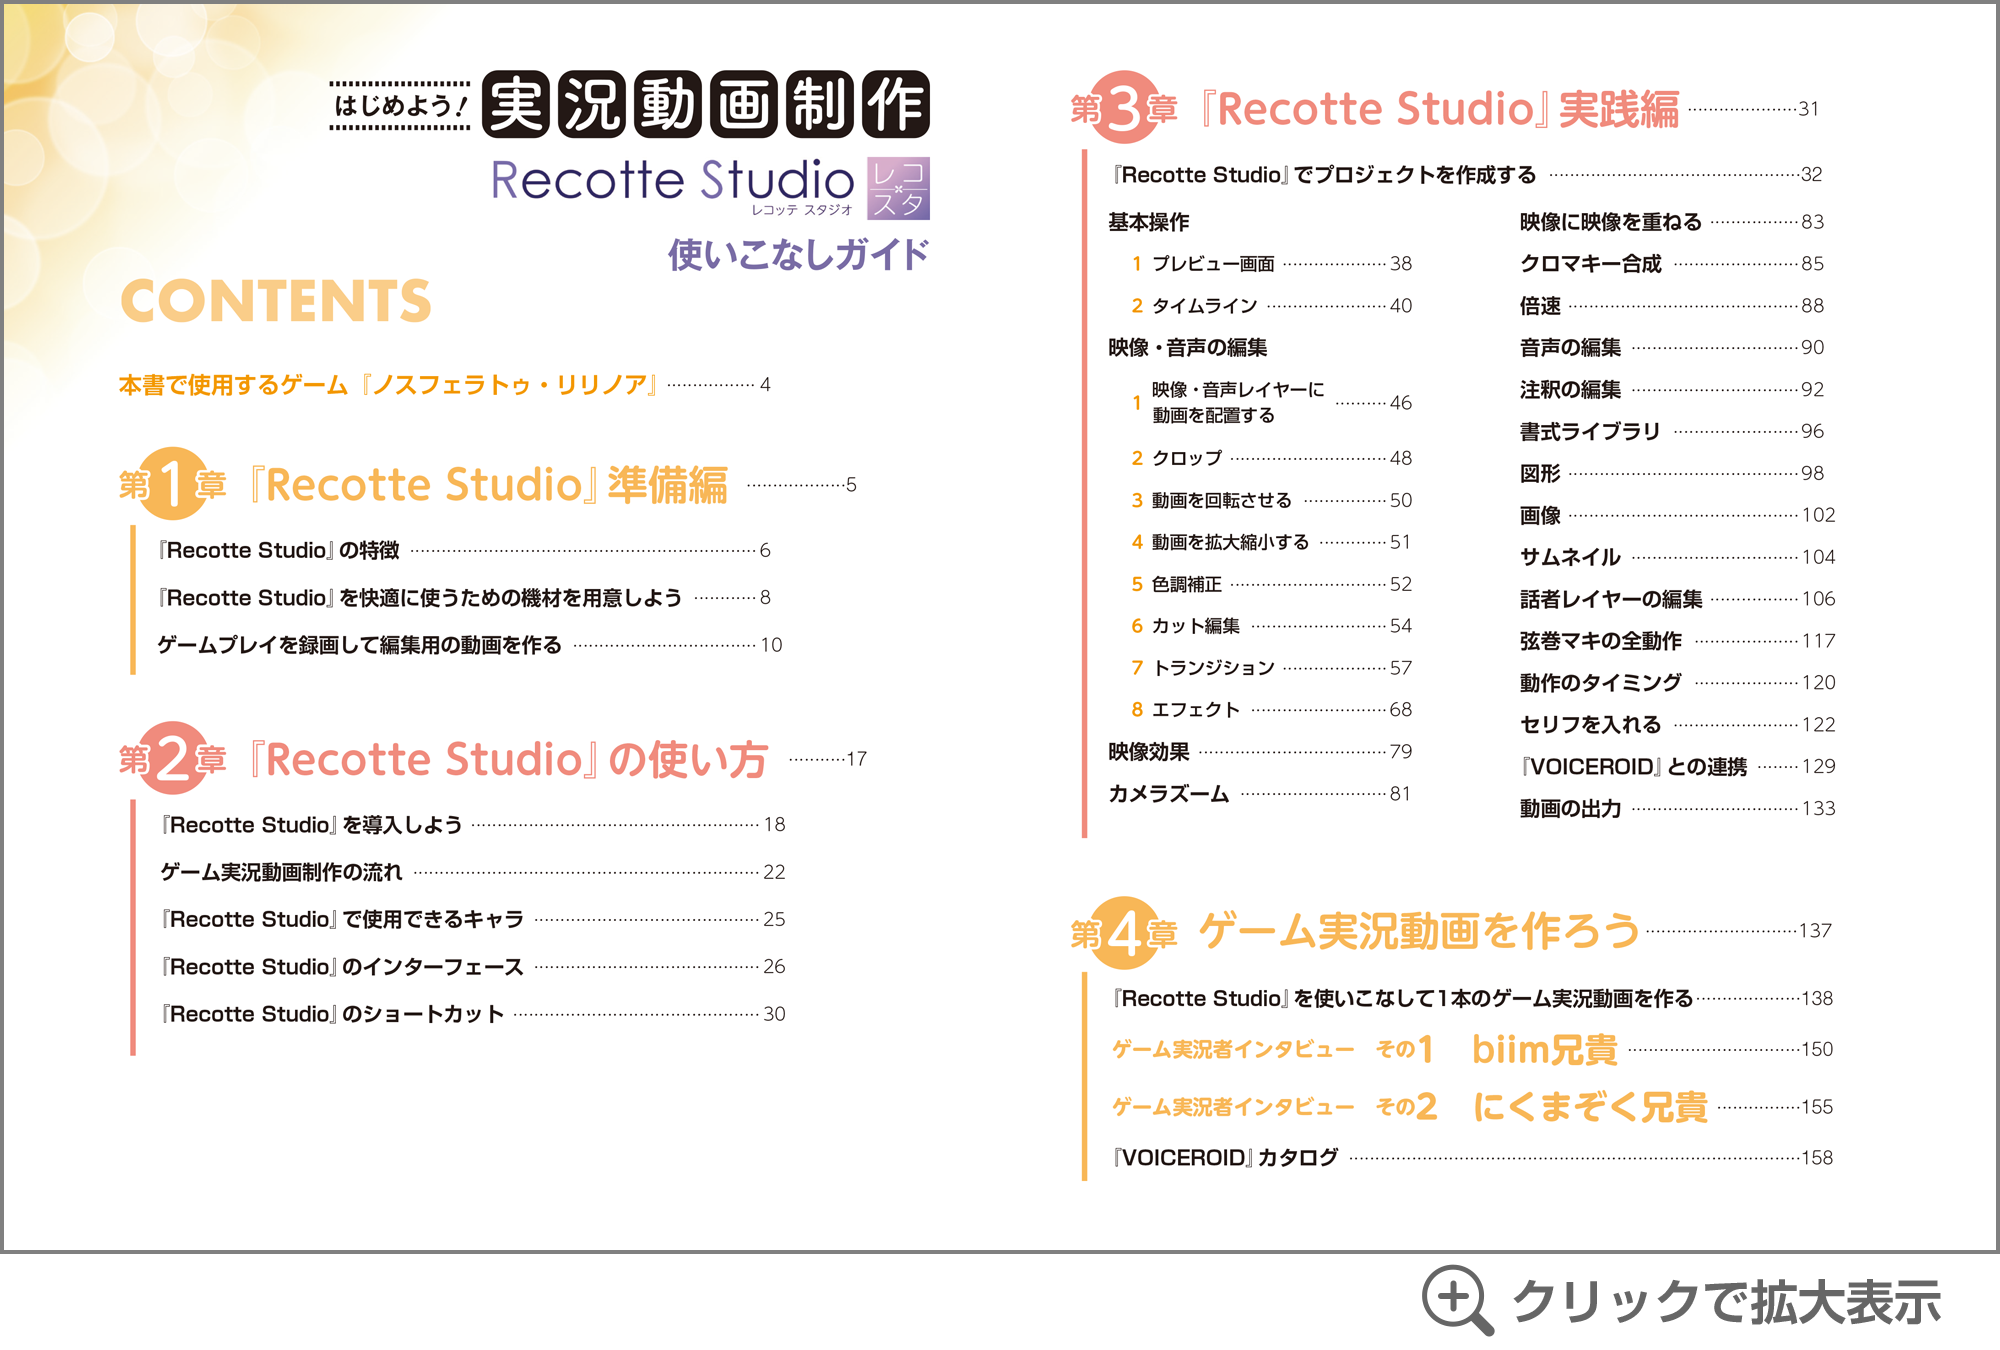 Recotte Studio - 実況動画作成ソフトウェア｜製品情報｜AHS(AH-Software)